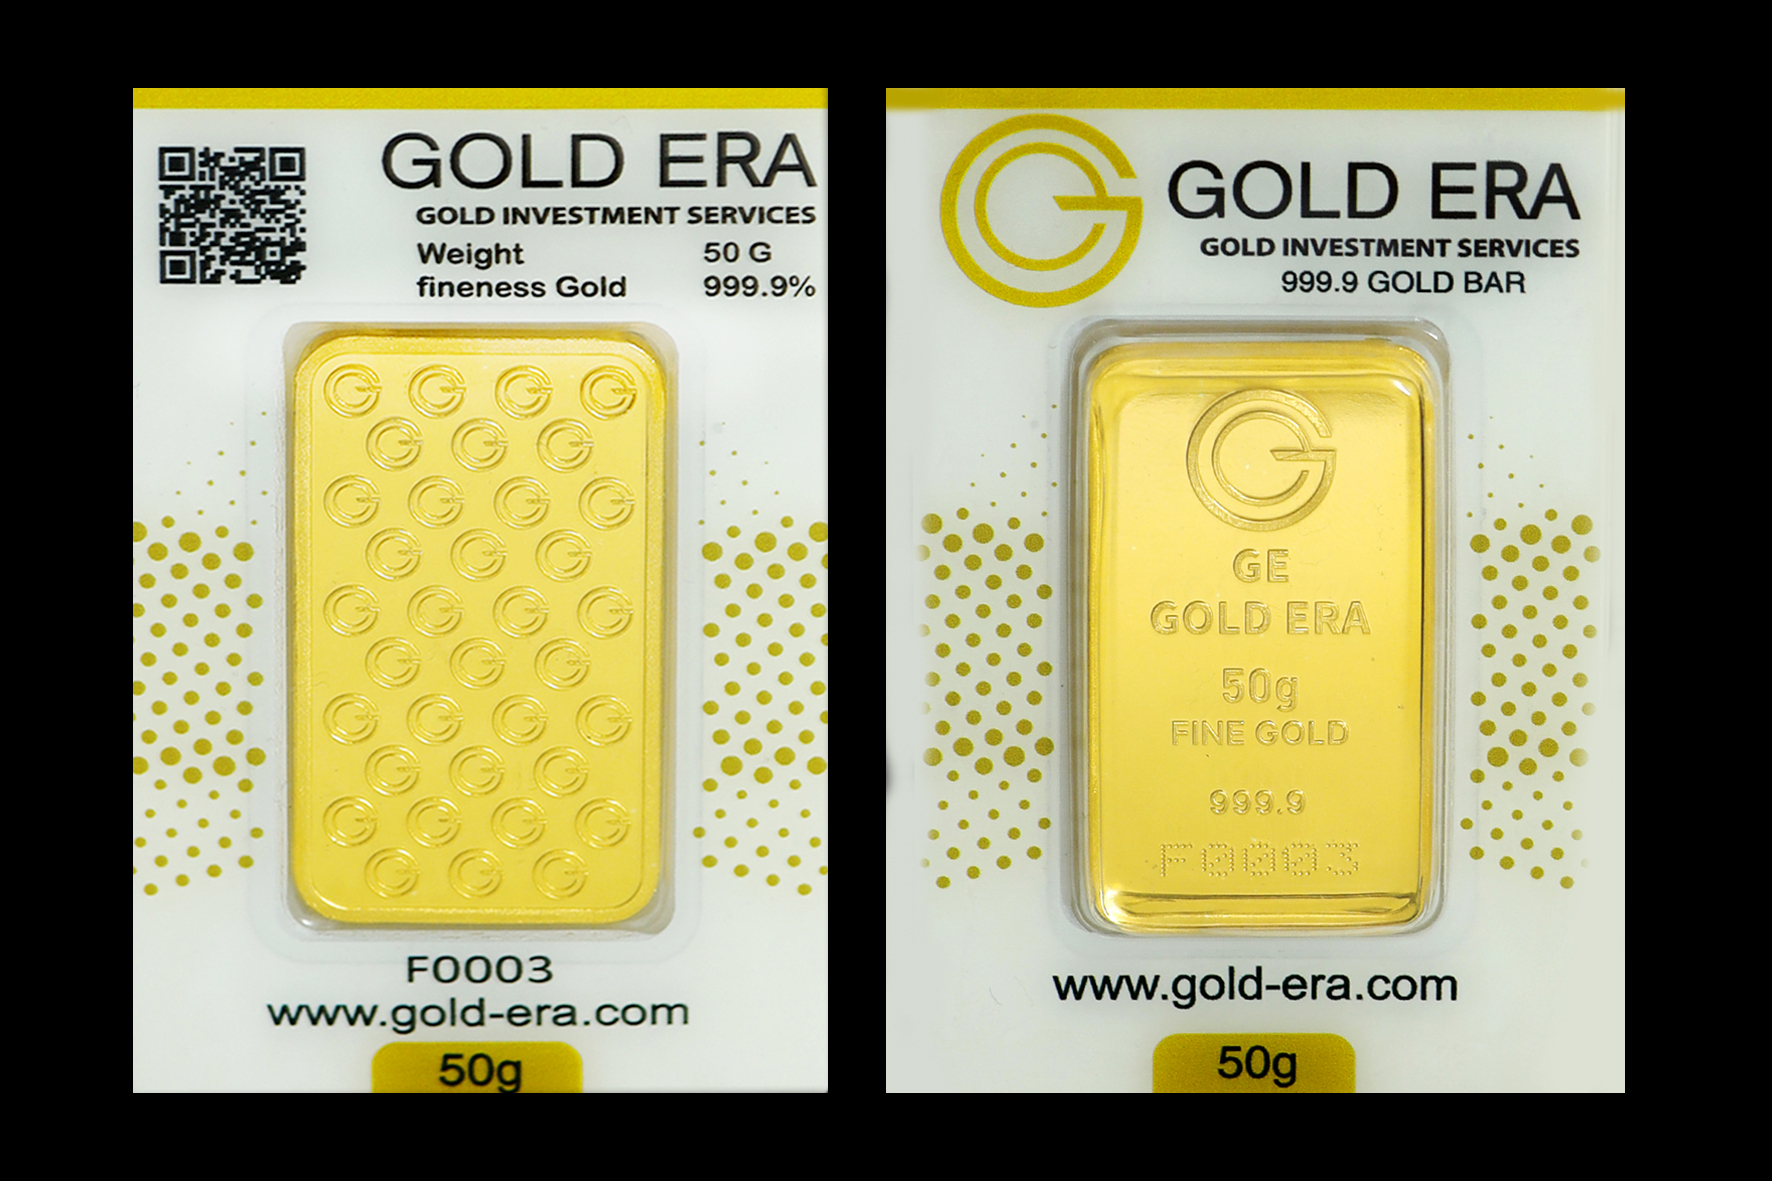 Gramera Digital BBG GOLD-50, BBG